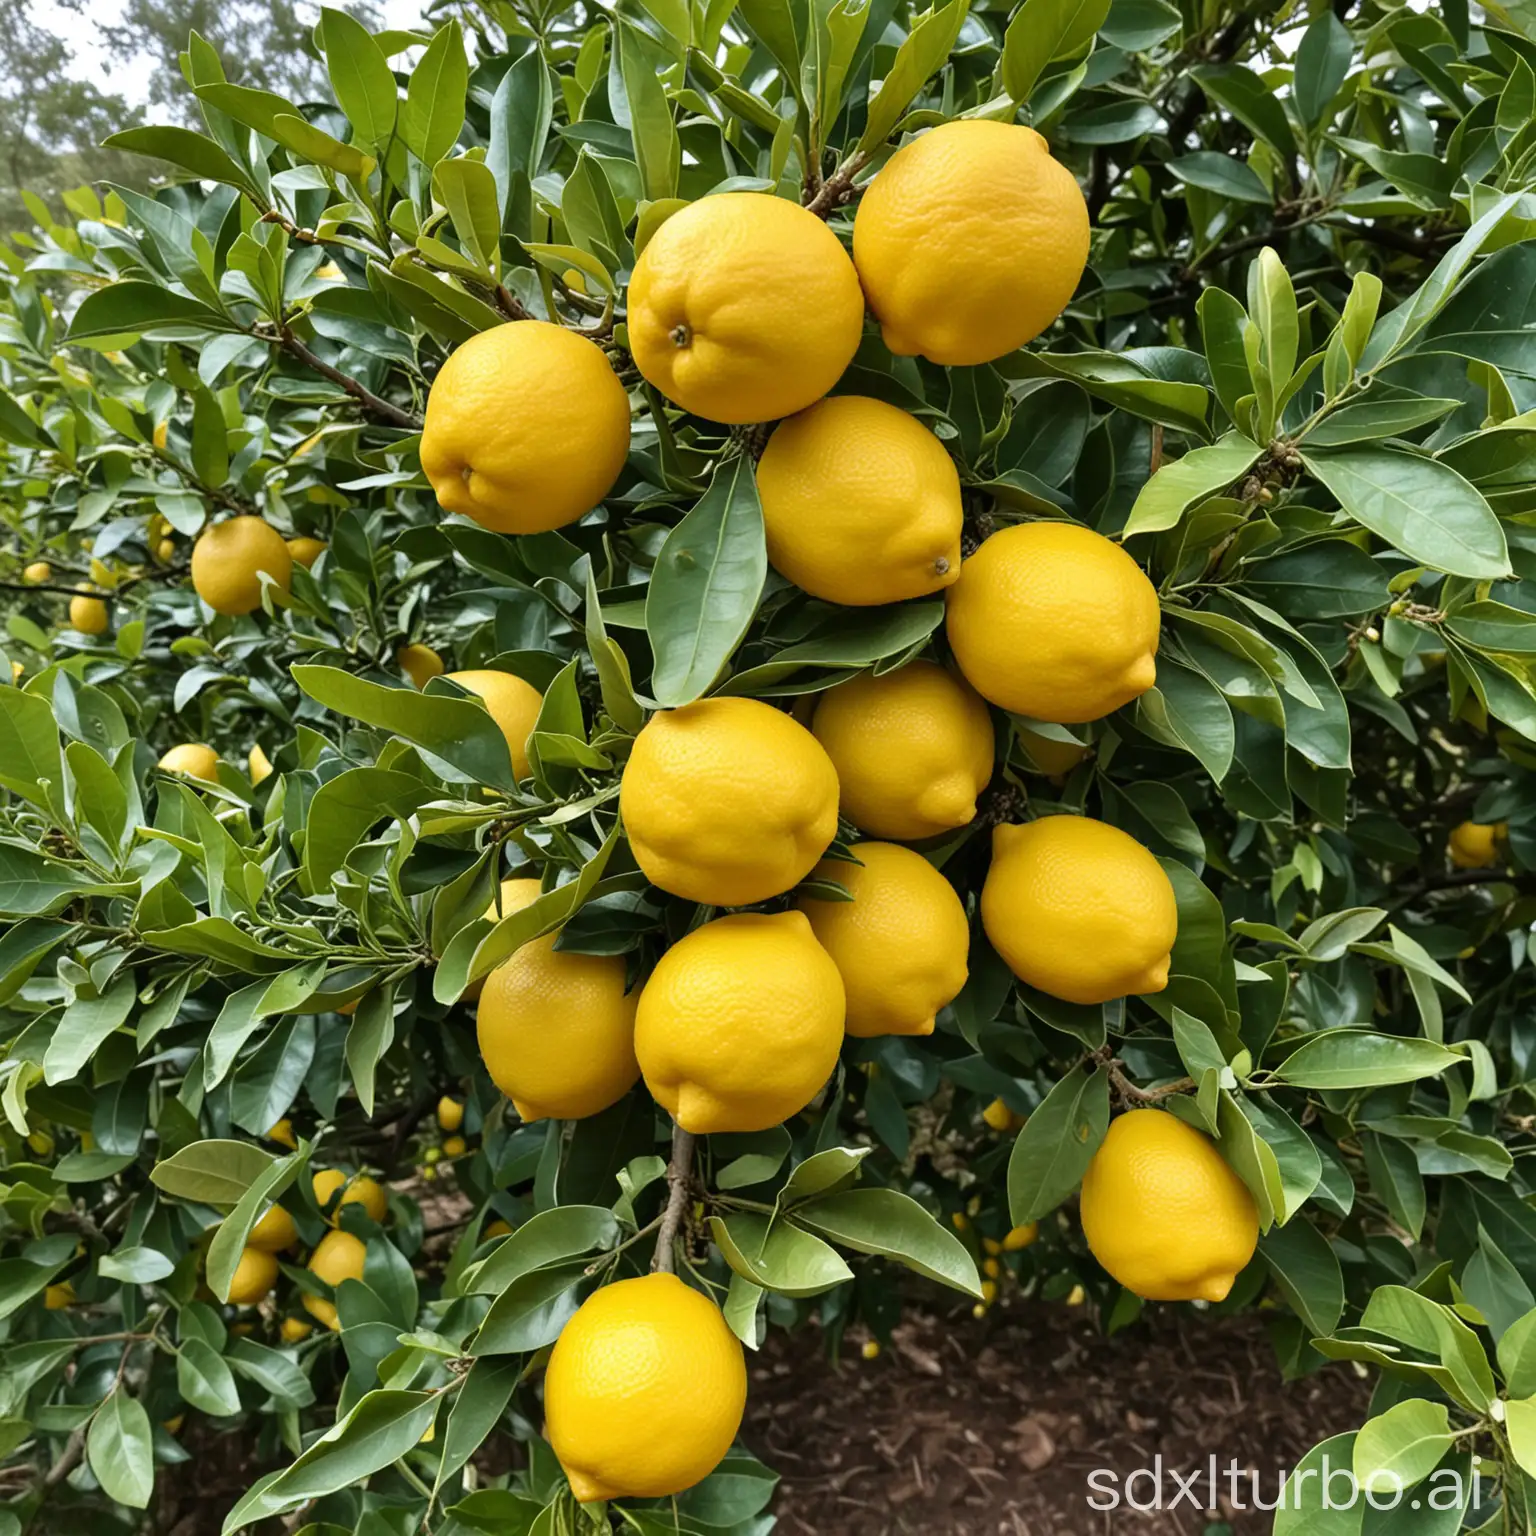 Ripe-Lemons-Hanging-on-a-Lush-Lemon-Tree